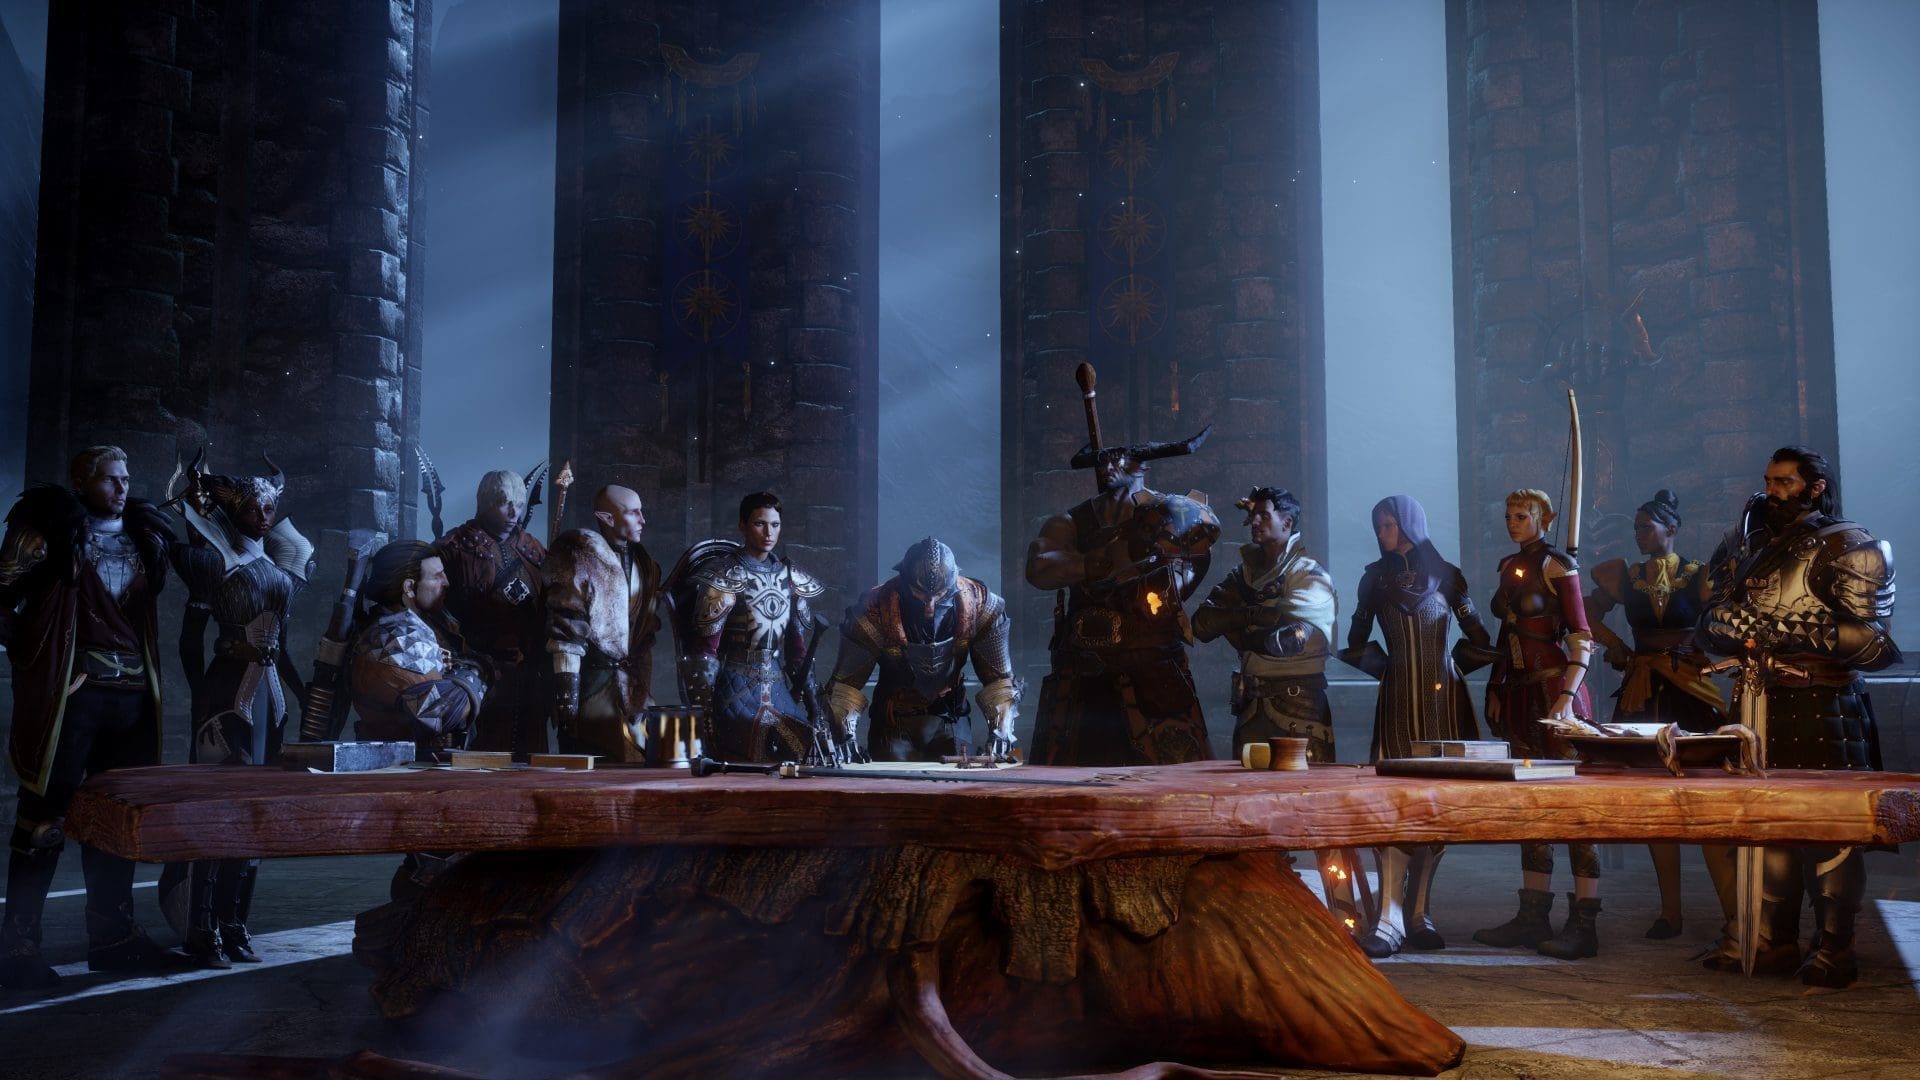 Dragon Age Inquisition, Gamescom, trailer, video game news